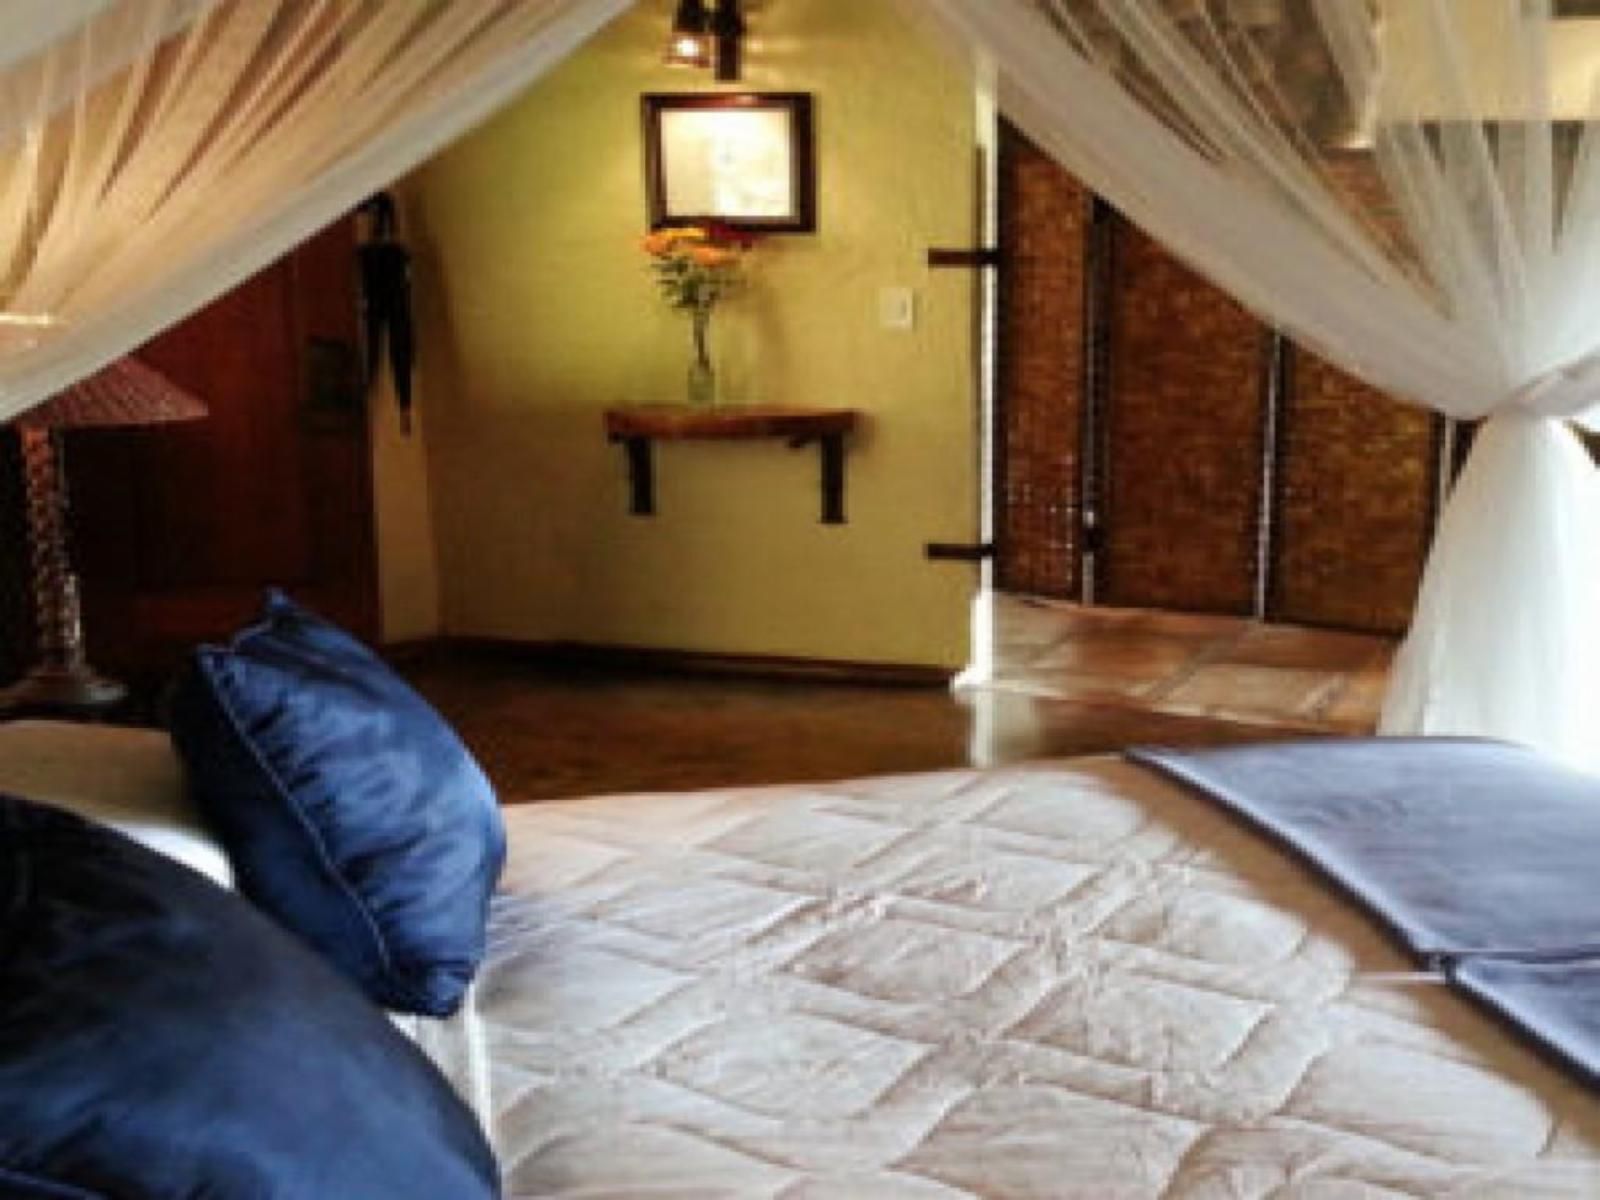 Tanamera Lodge Hazyview Mpumalanga South Africa 